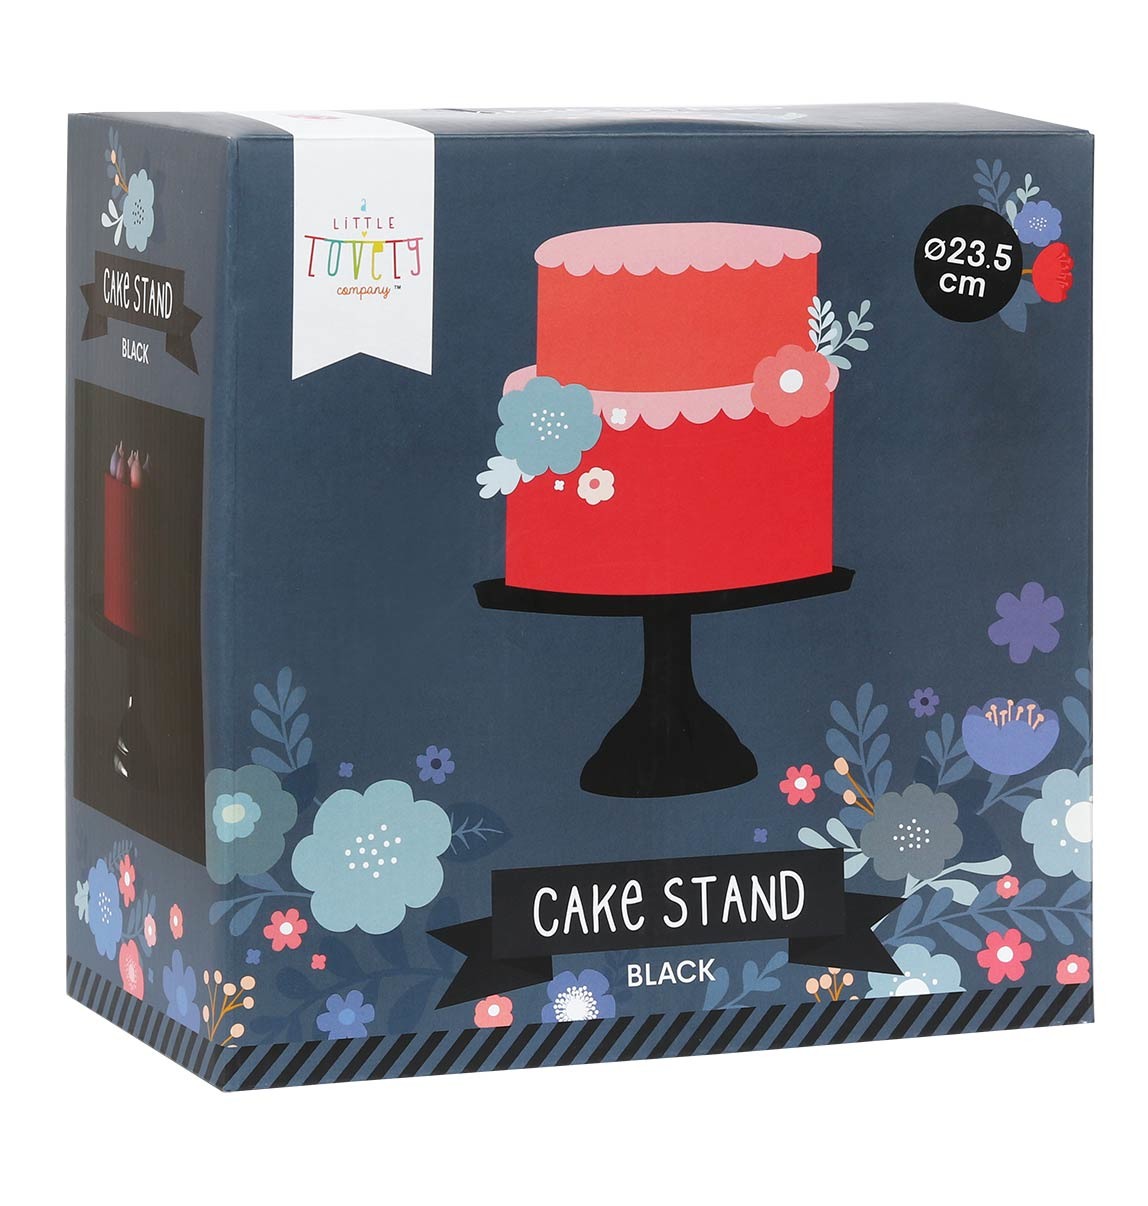 ALLC Cake Stand Small PTCSBL10 noir 23.5x12x23.5cm